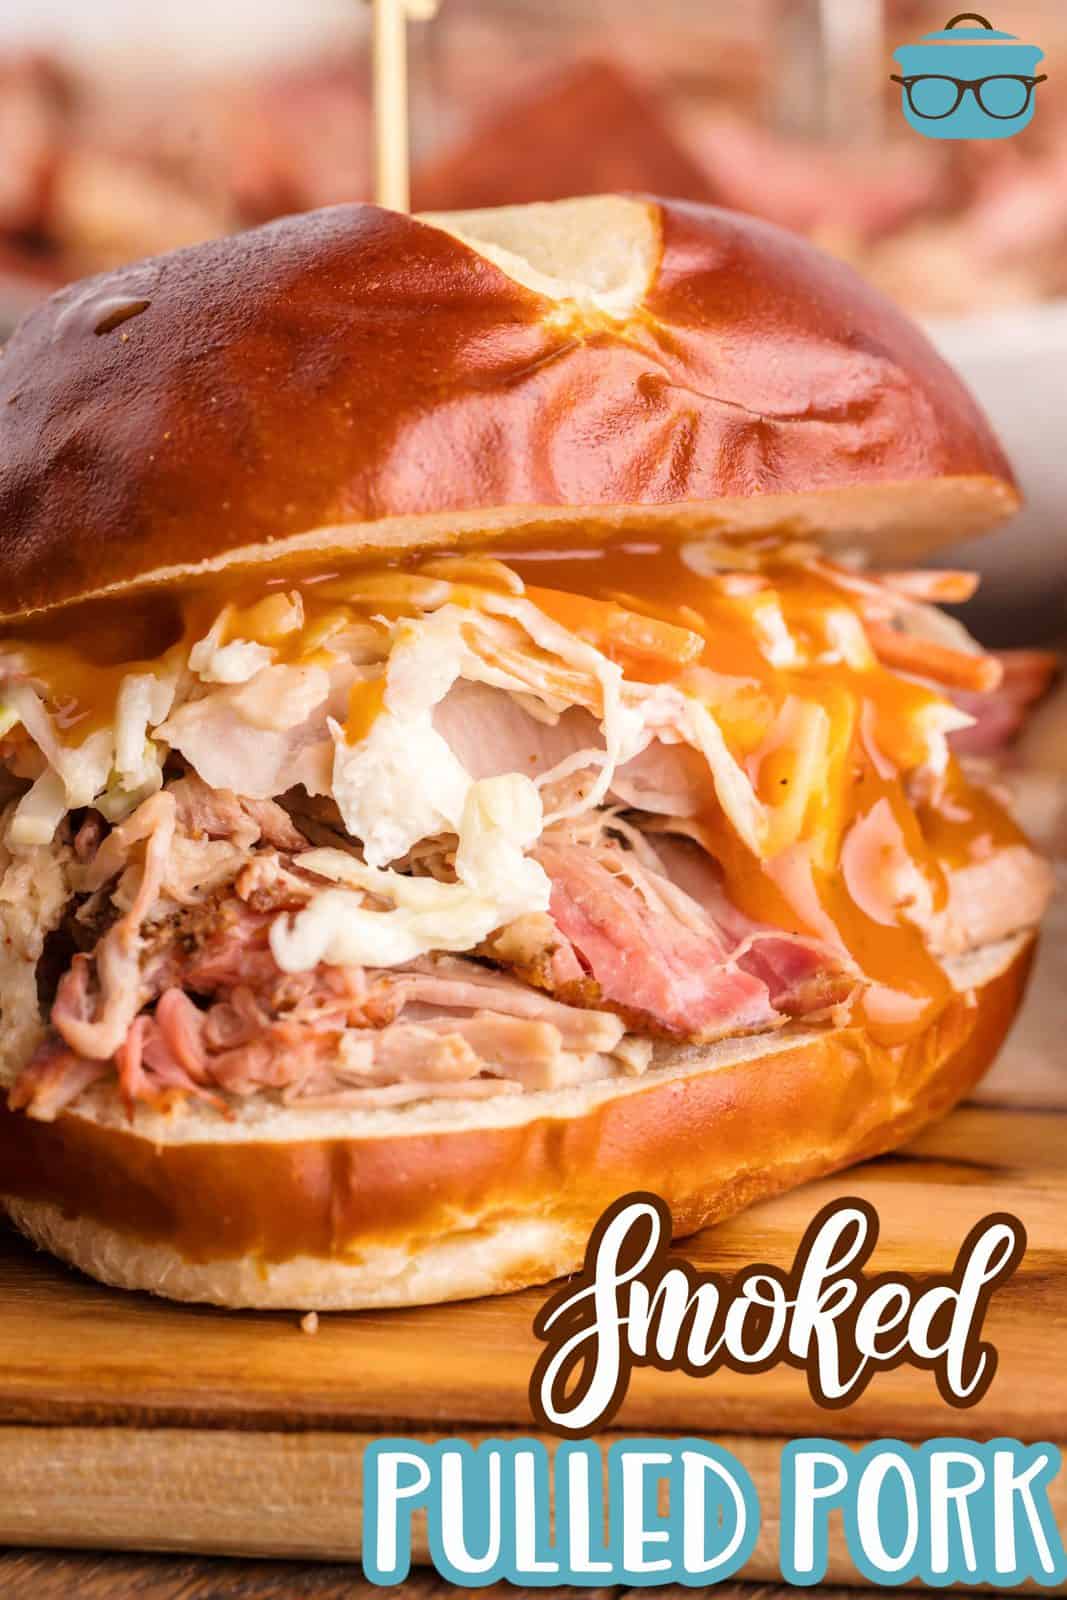 Close up of Smoke Pulled Pork sandwich Pinterest image.